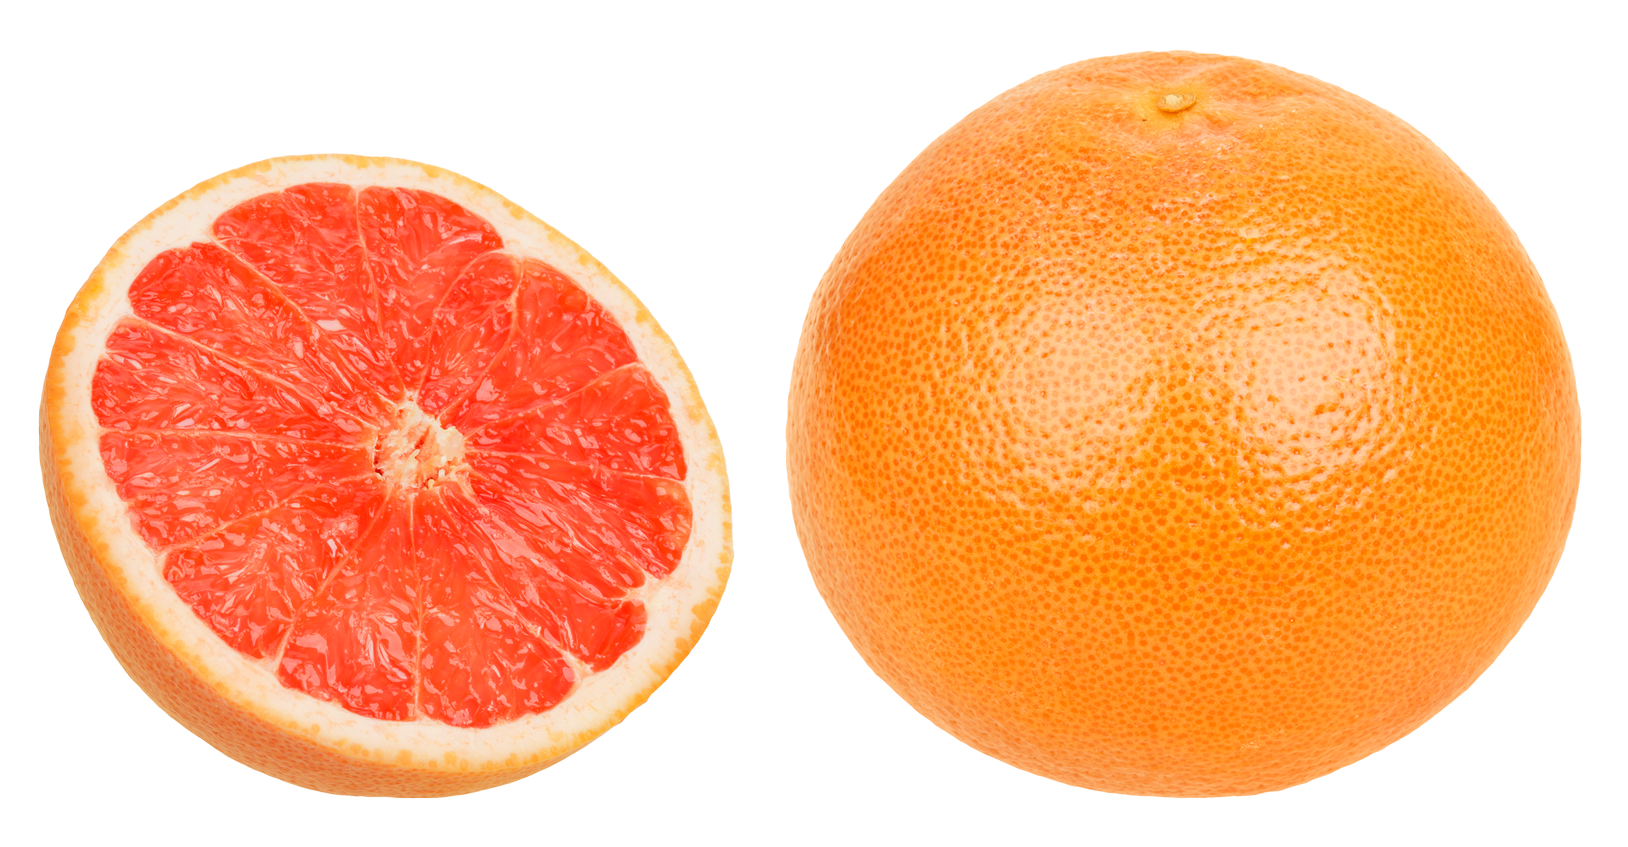 Grapefruit PNG image #5 PlusP